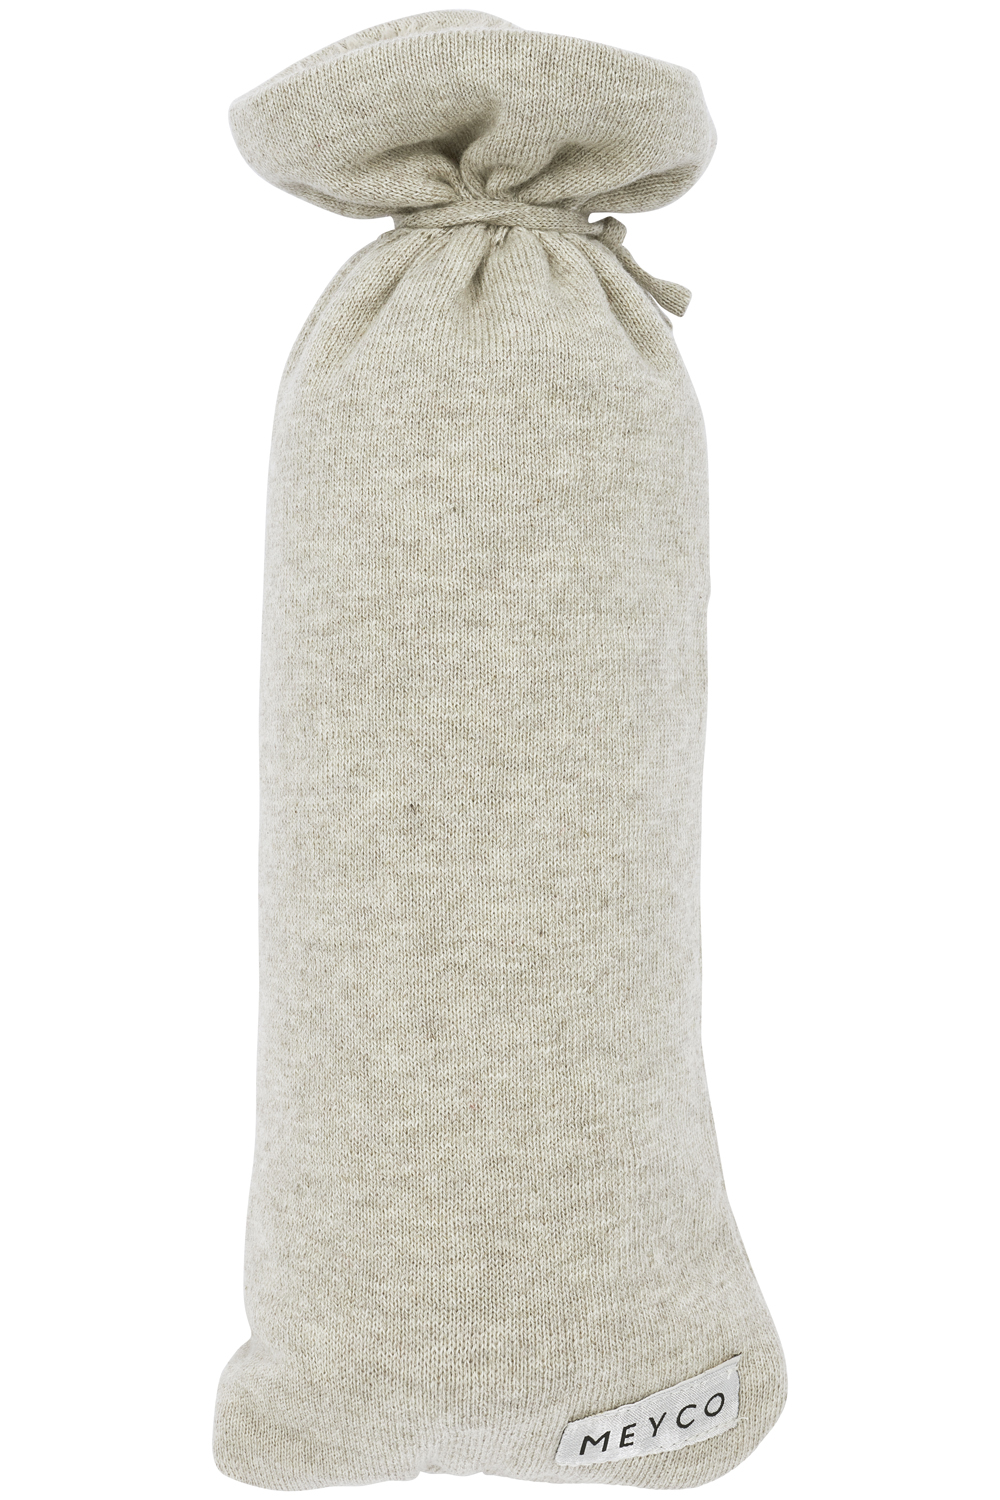 Hot Water Bottle Cover Knit Basic - Sand Melange - 13xh35cm